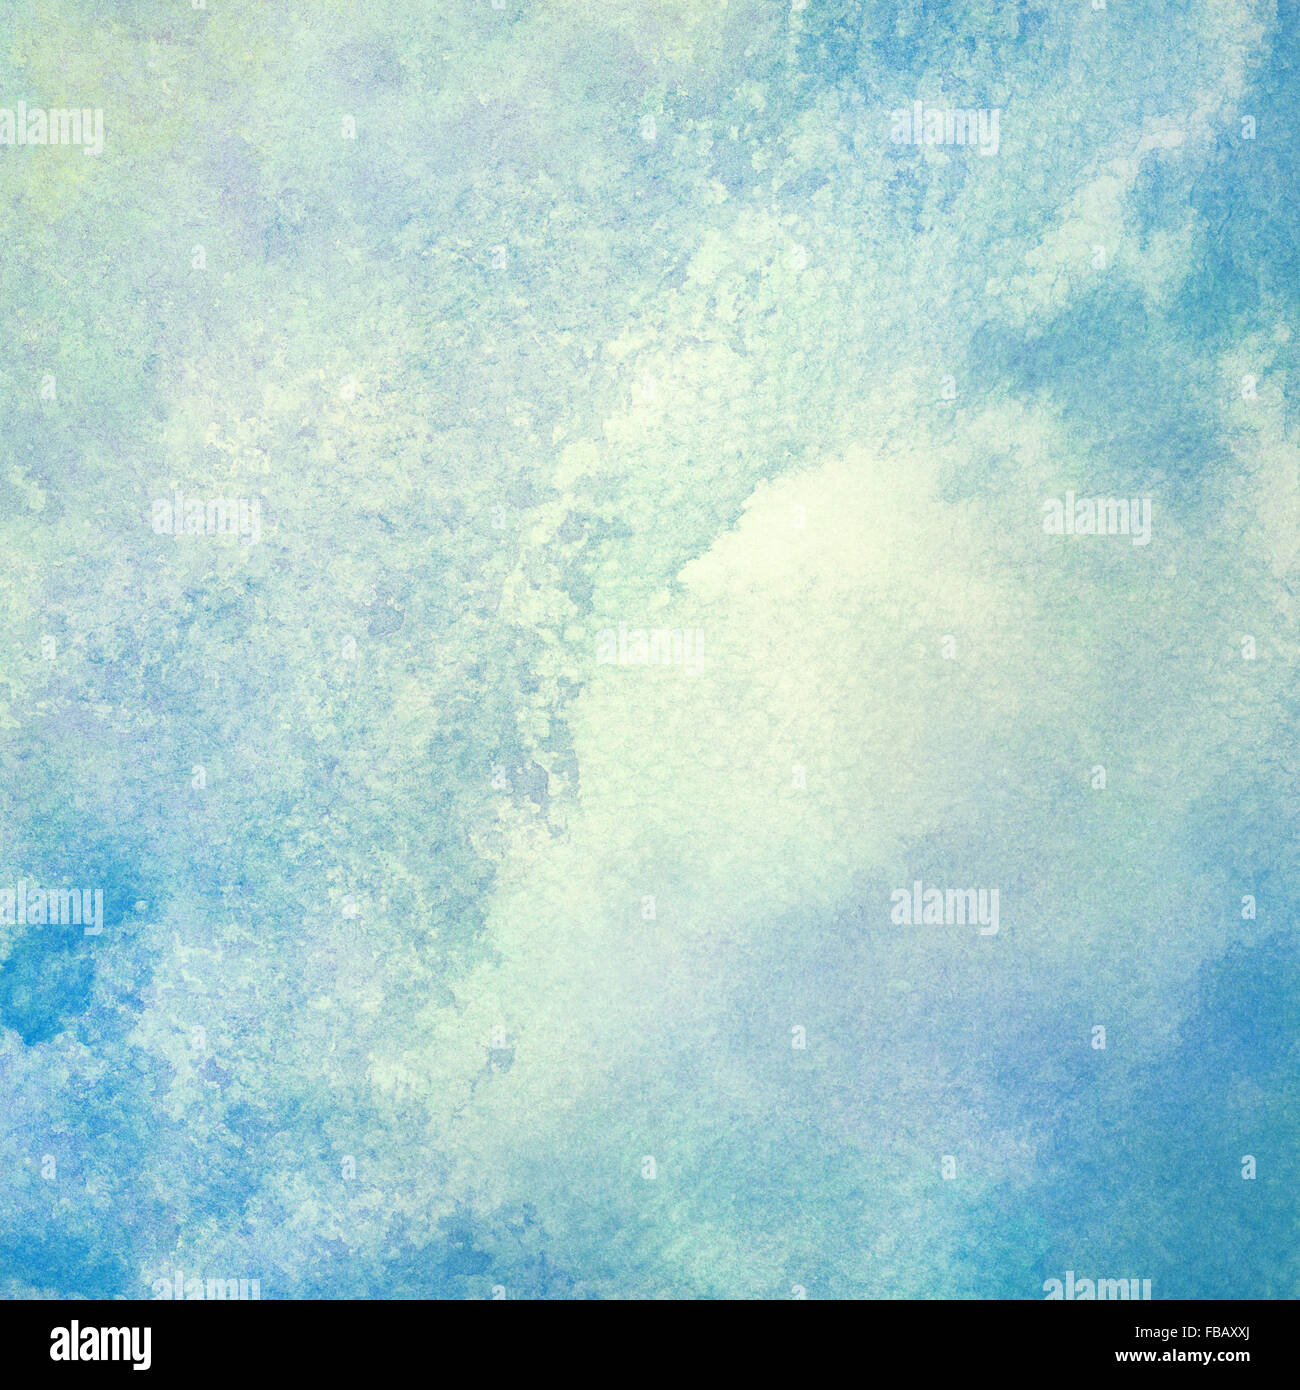 Abstrakte hellblau lackiert, Aquarell Spritzer oder Wolke, Himmel Stockfoto